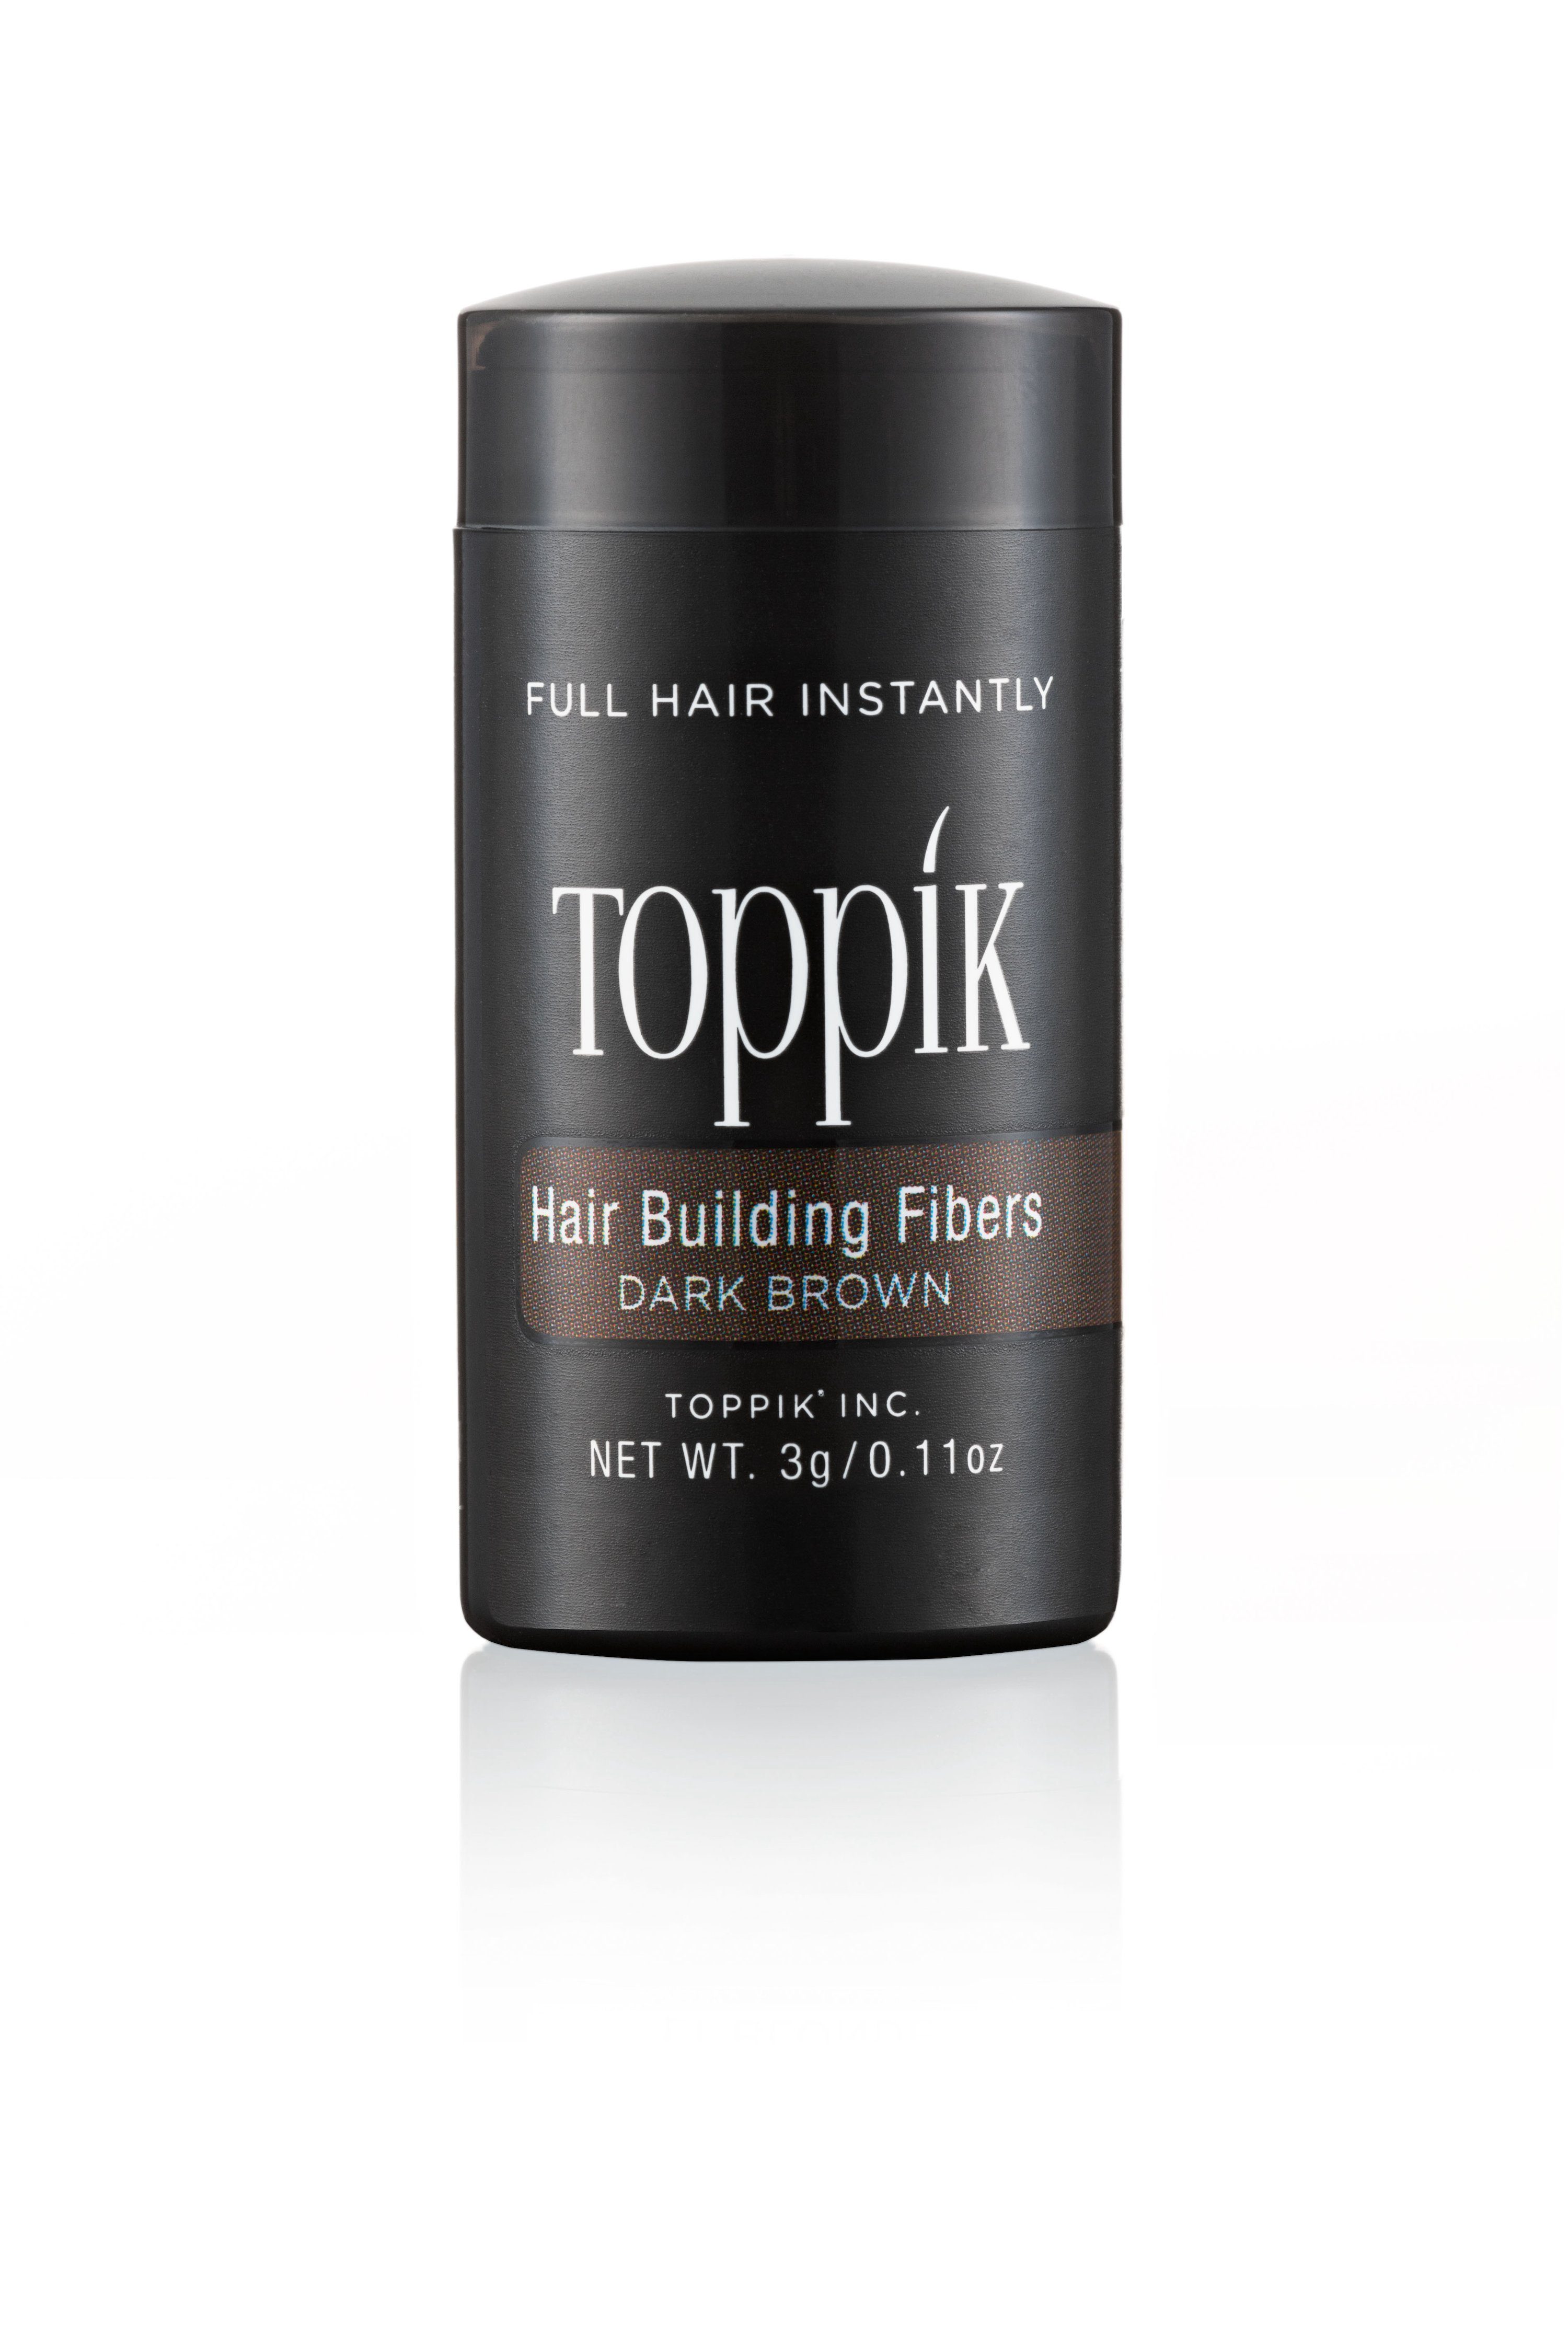 Haarstyling-Set TOPPIK 3g. - Streuhaar, Haarverdichtung, Schütthaar, Haarfasern, Puder, Hair Fibers